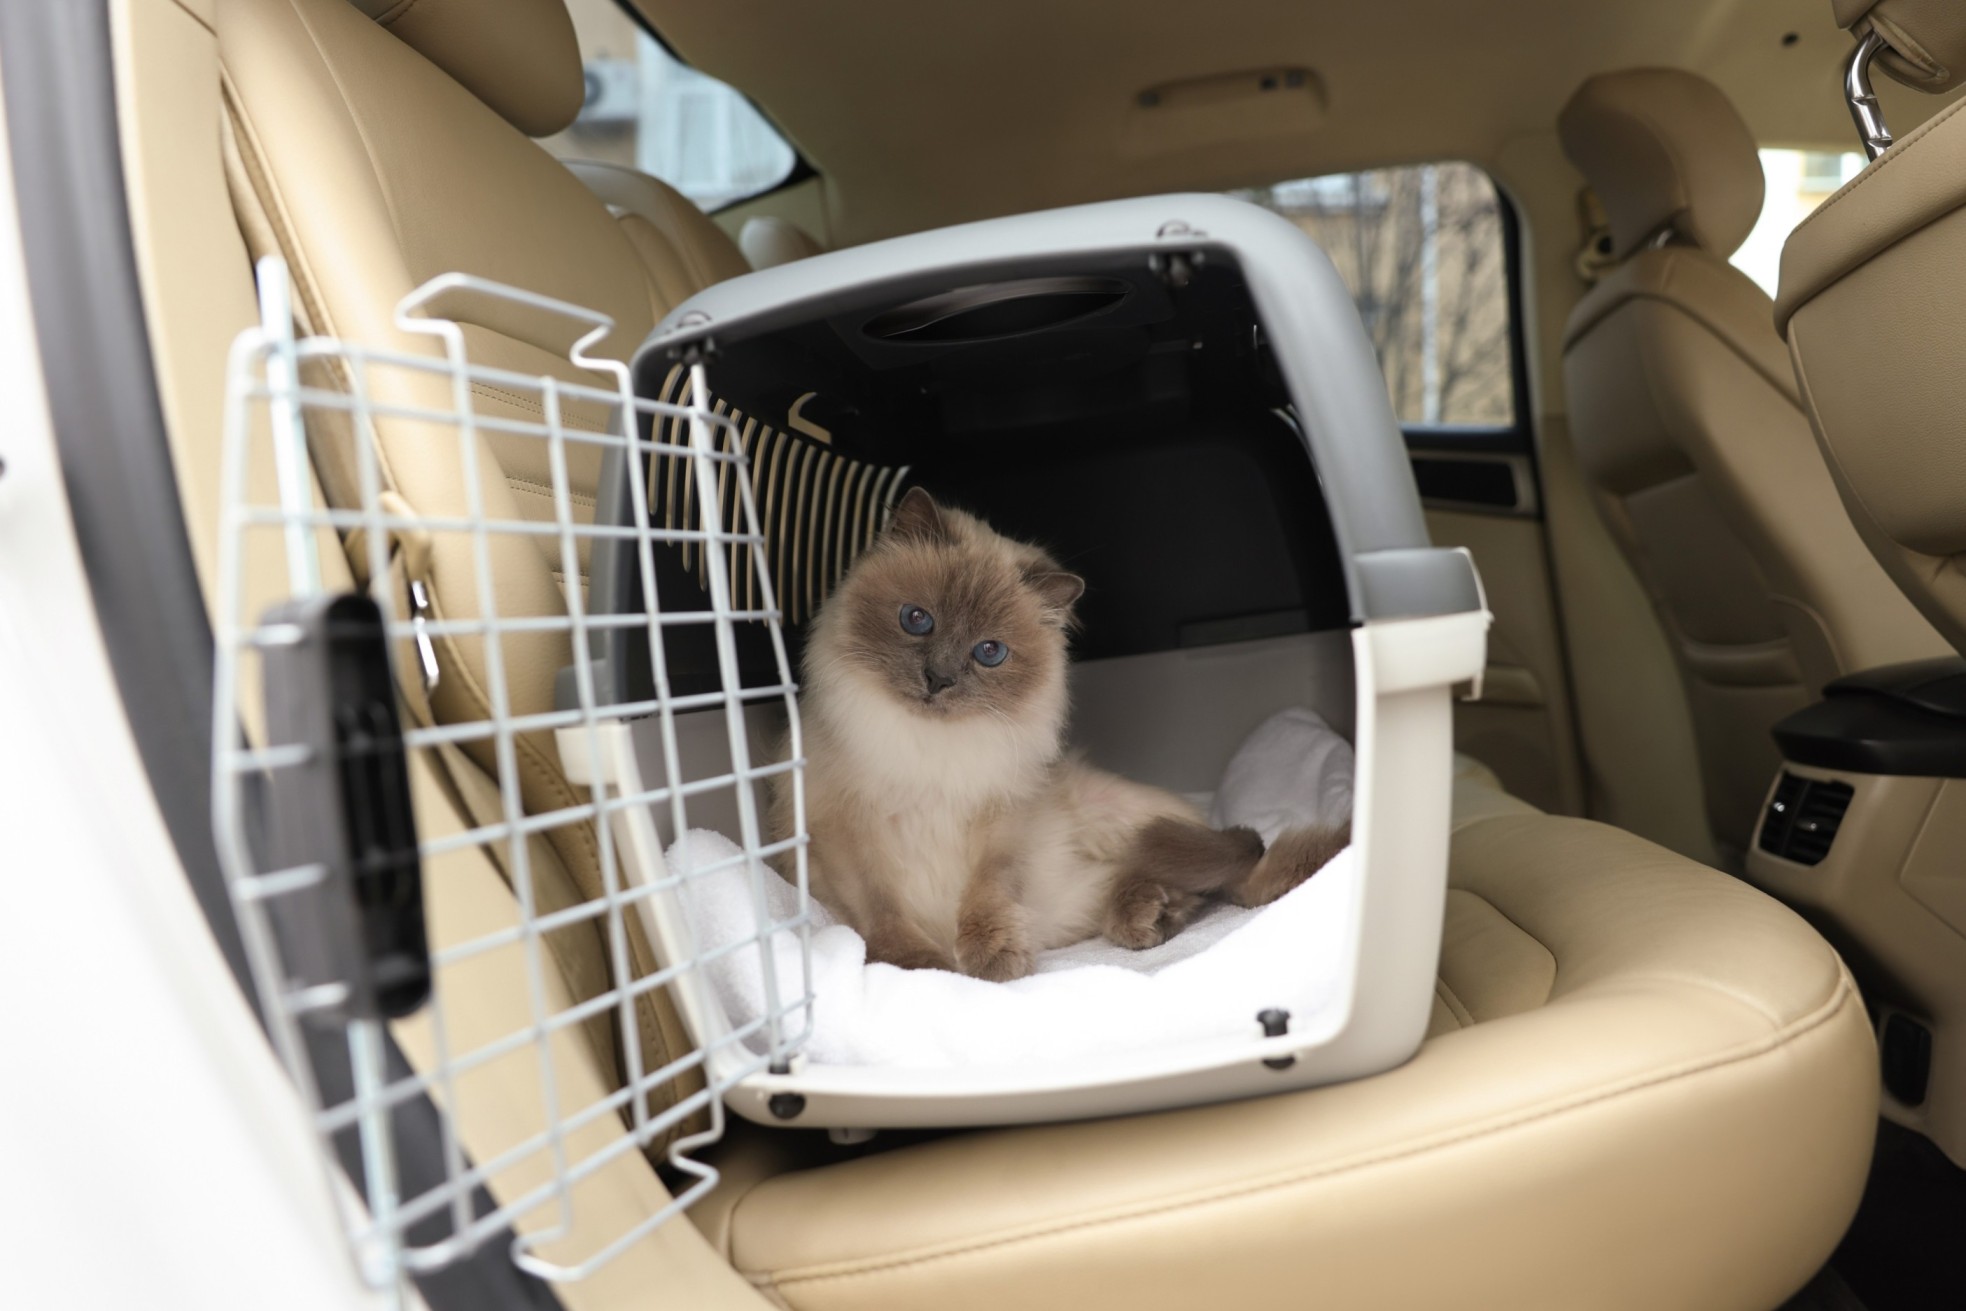 A cat in a carrier sitting inside a car